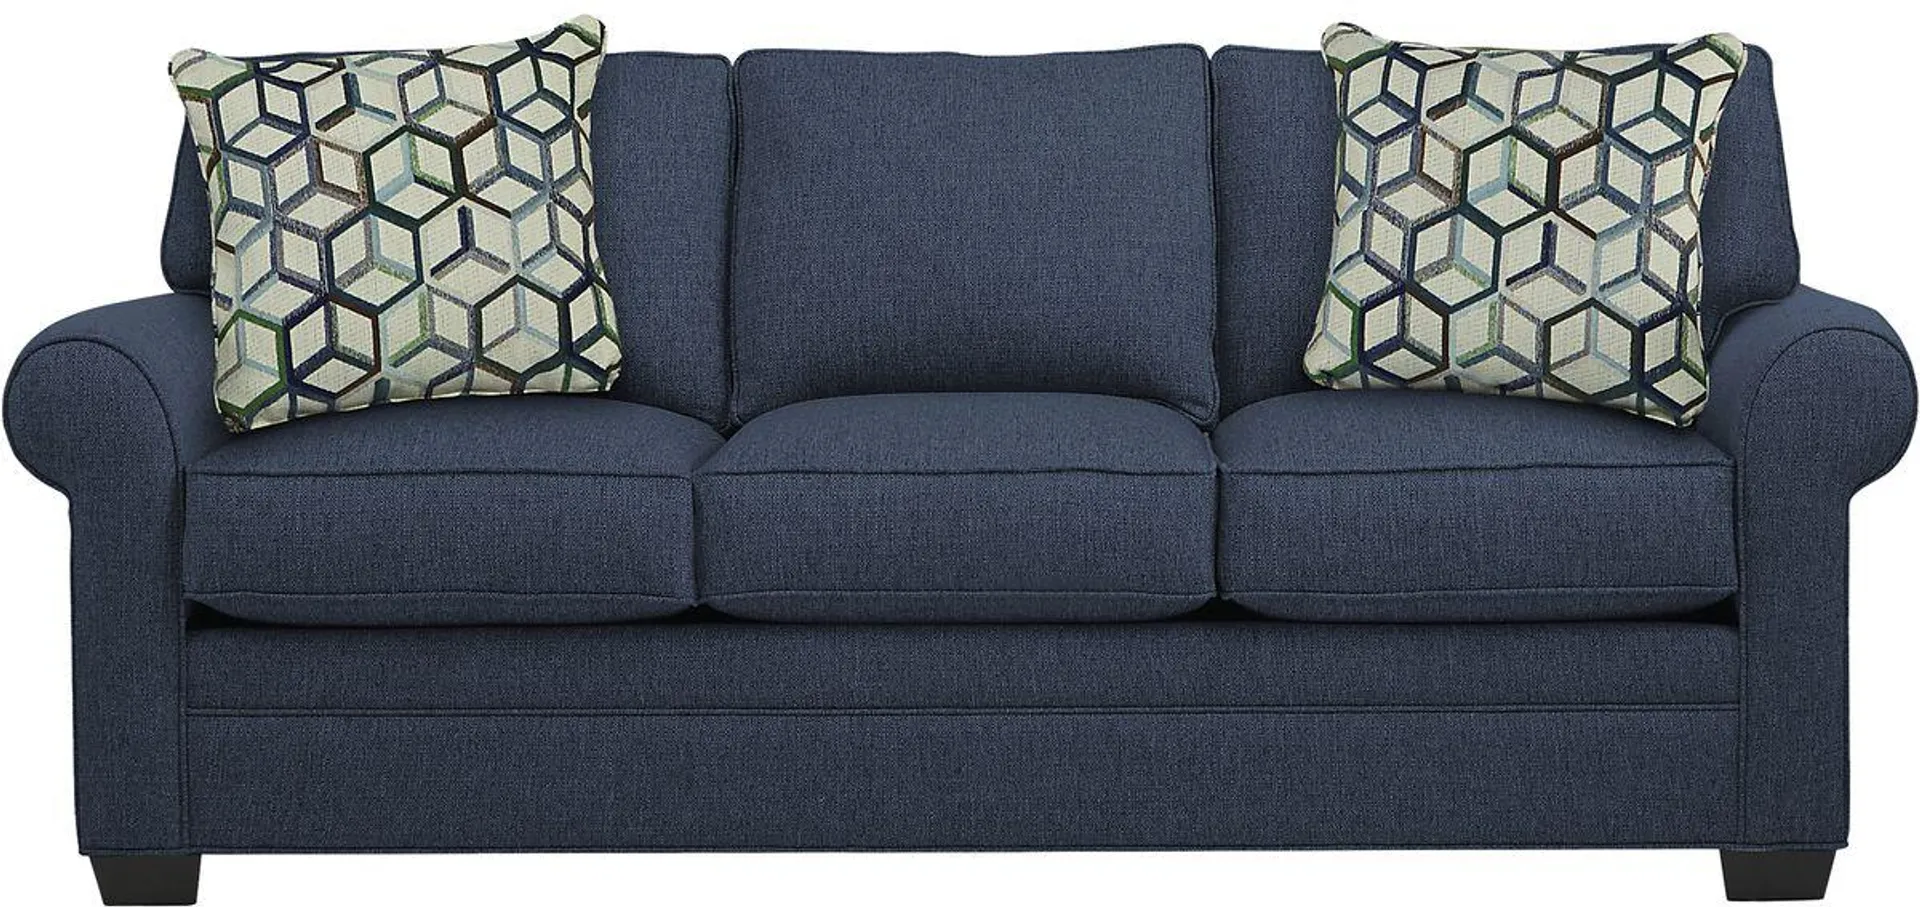 Cindy Crawford Bellingham Midnight Blue Textured Premium Sleeper Sofa